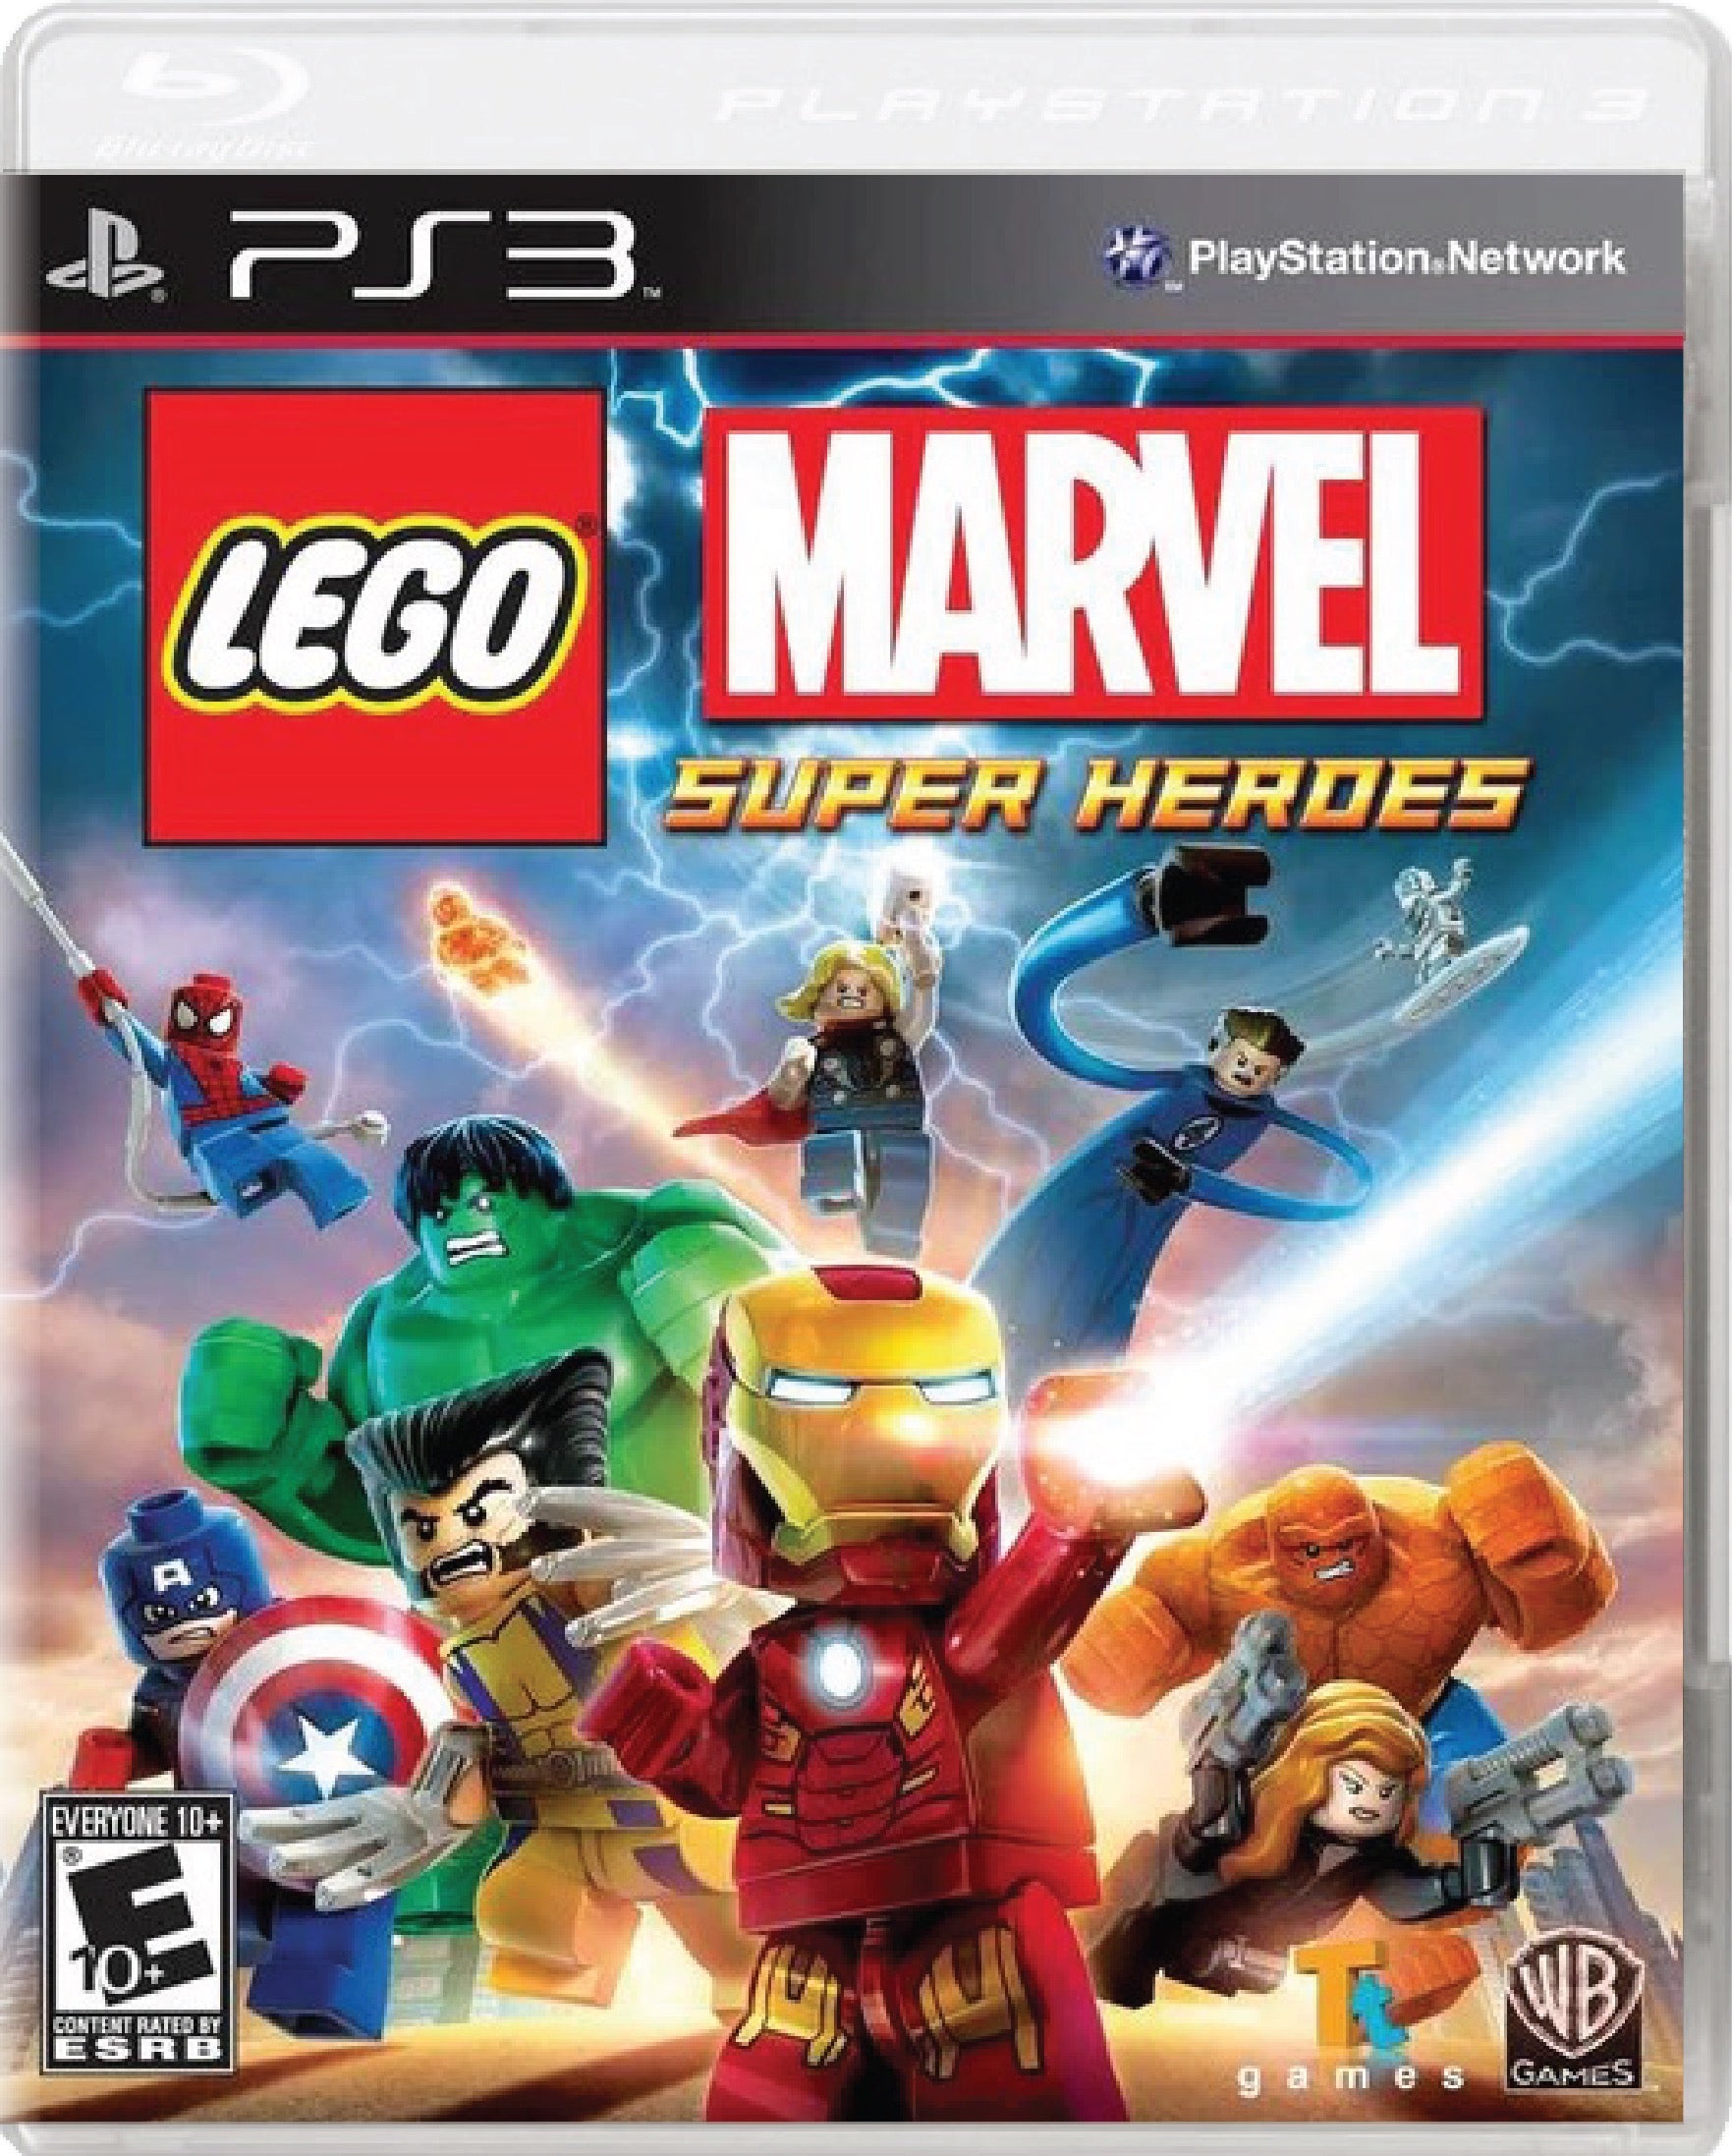 LEGO Marvel Super Heroes Cover Art